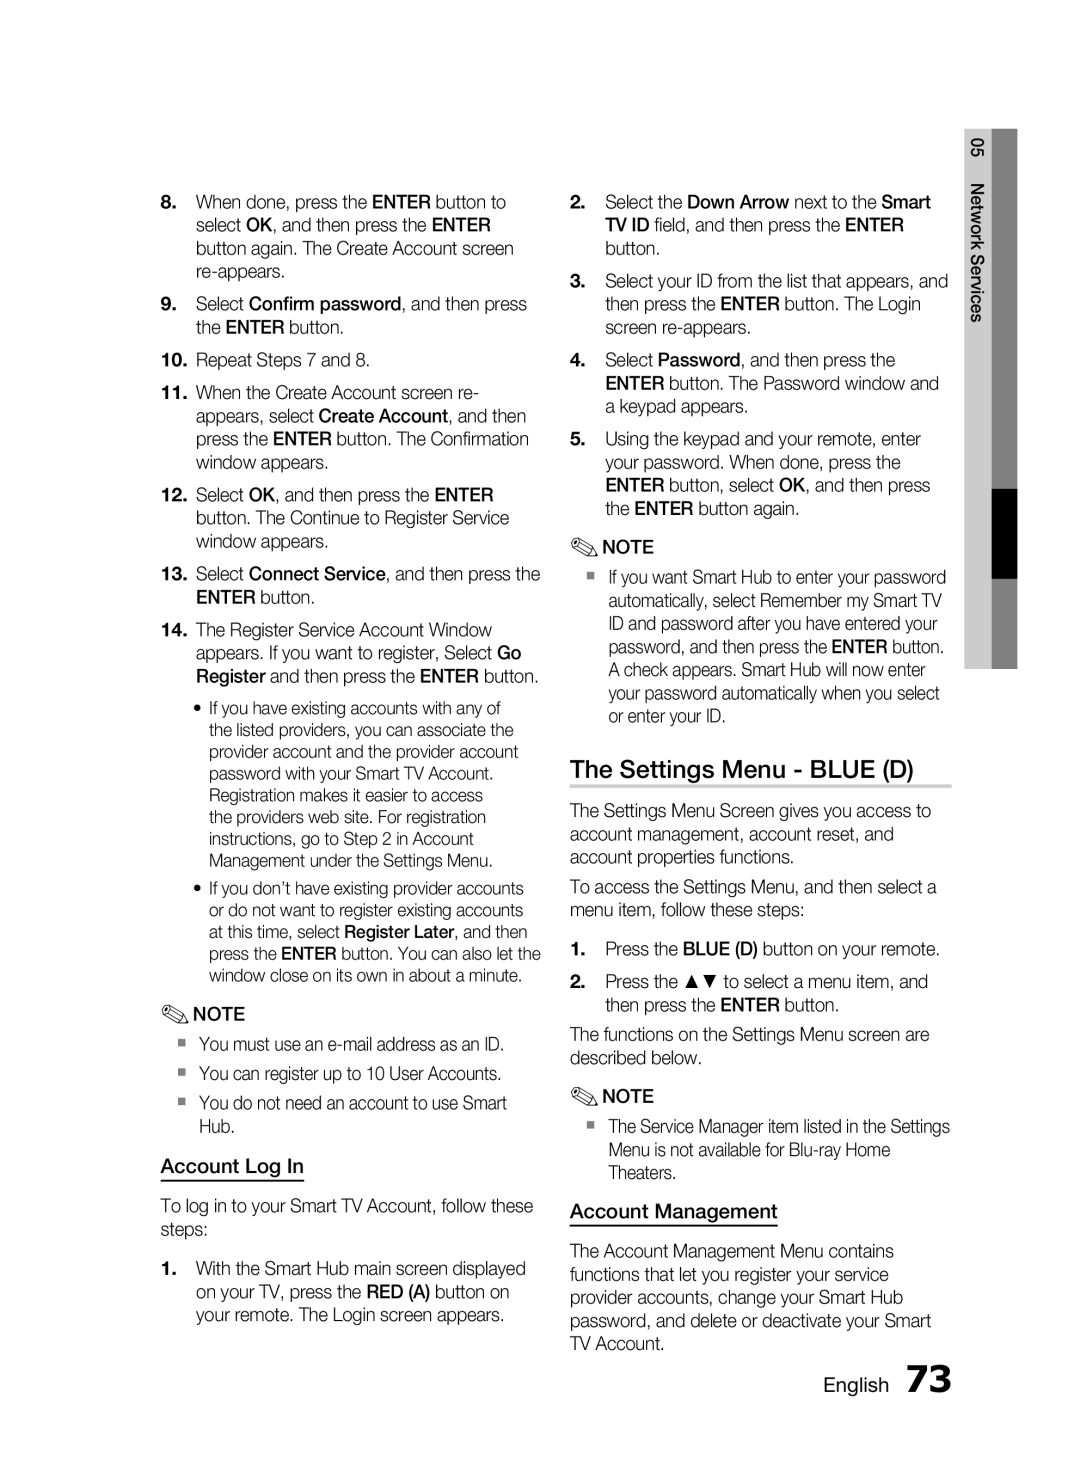 Samsung HW-D7000 user manual The Settings Menu - BLUE D, Account Log In, Account Management, English 